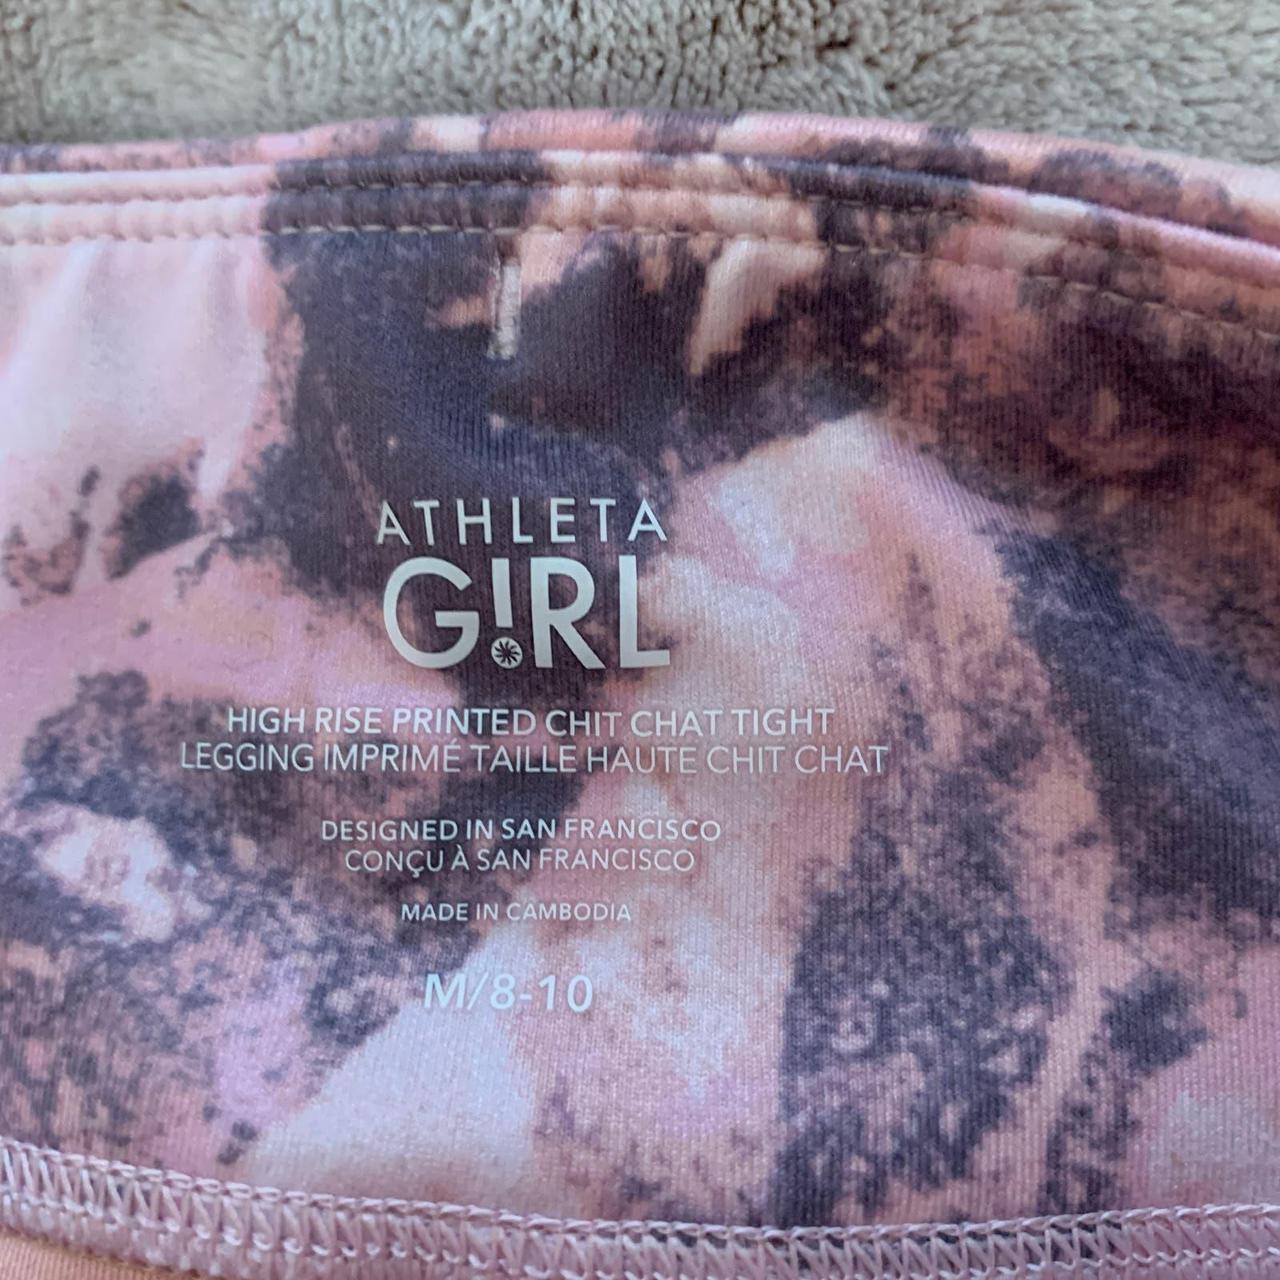 Athleta Girl High Rise Printed Chit Chat Tight Leggings